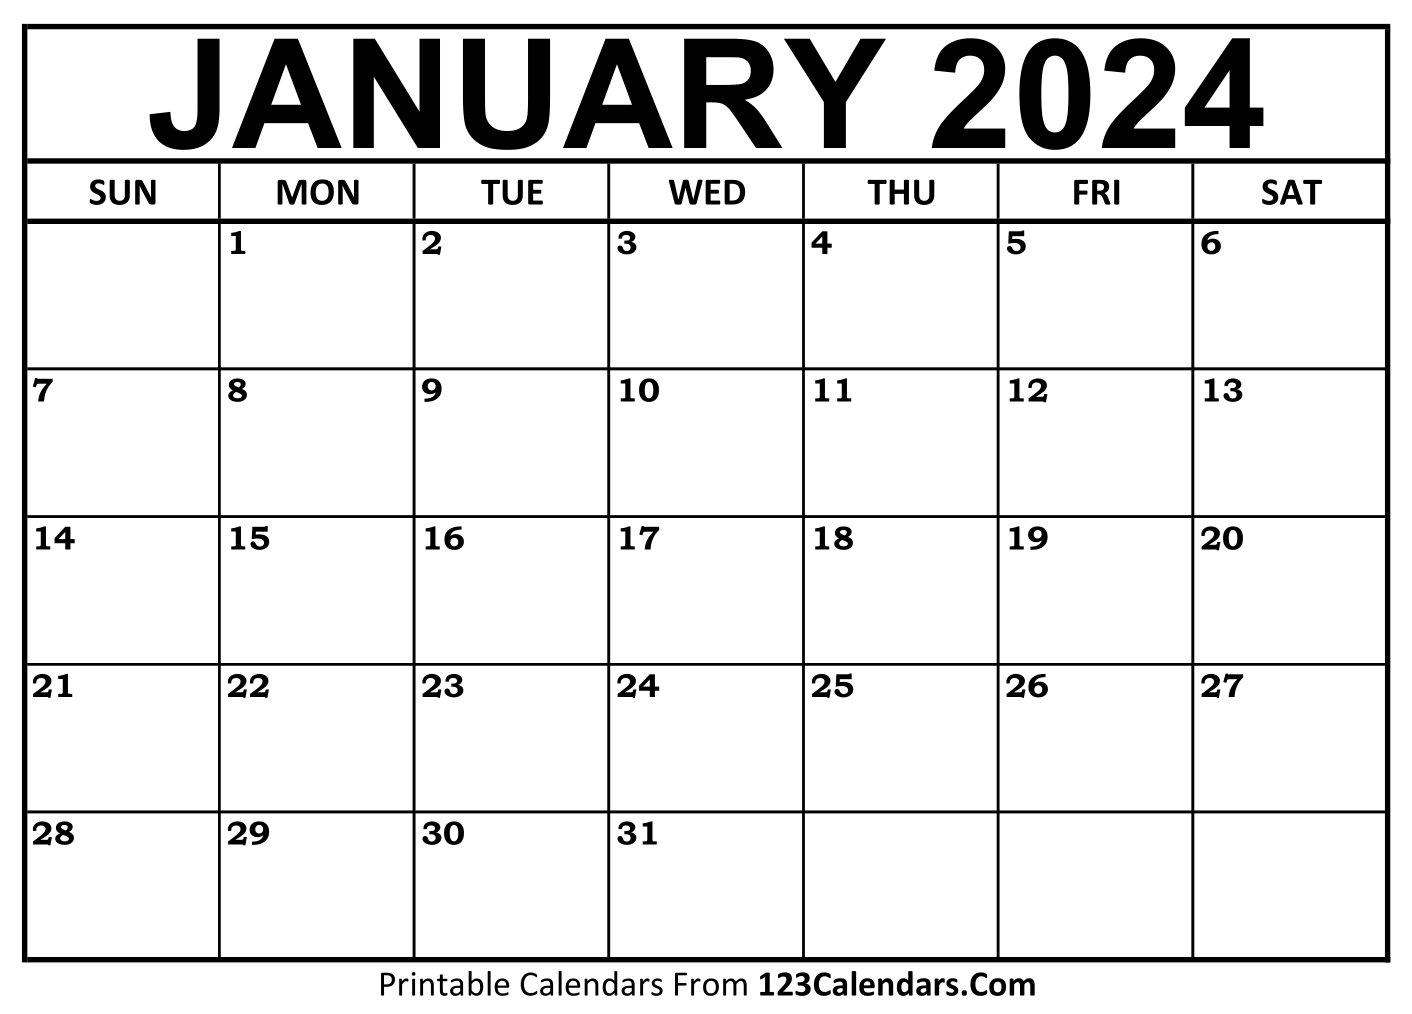 Printable January 2024 Calendar Templates - 123Calendars | Free Monthly Calendar 2024 Printable